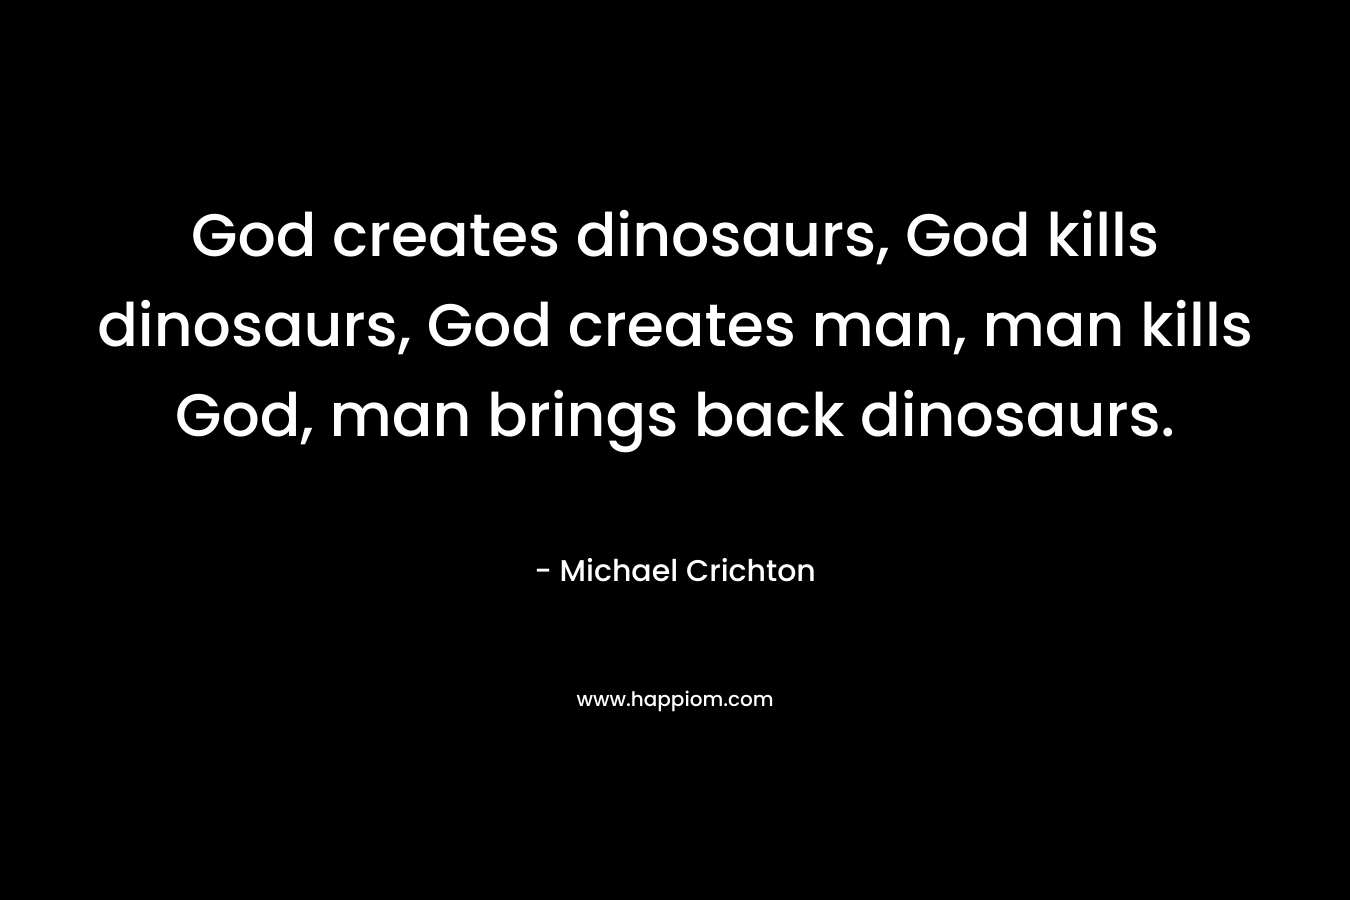 God creates dinosaurs, God kills dinosaurs, God creates man, man kills God, man brings back dinosaurs.